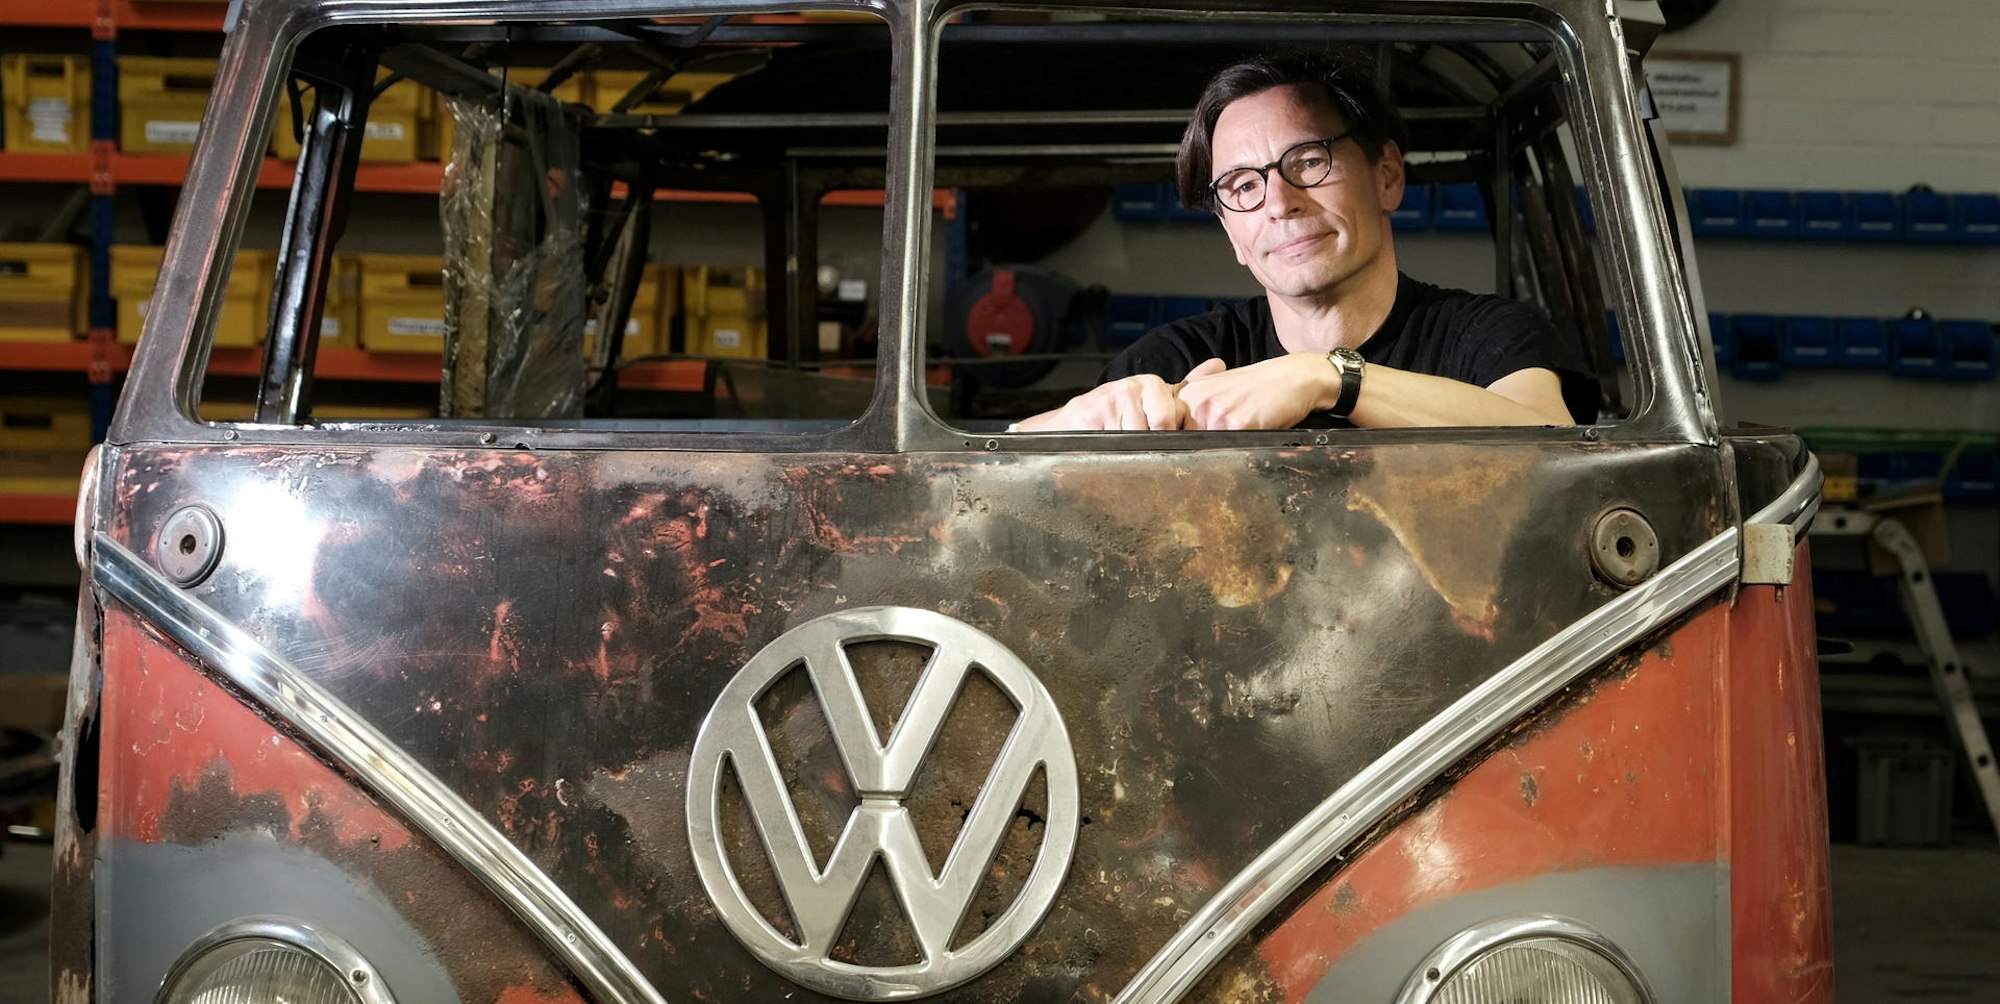 Florian Kalff zeigt stolz seinen teilweise restaurierten VW-Bus.